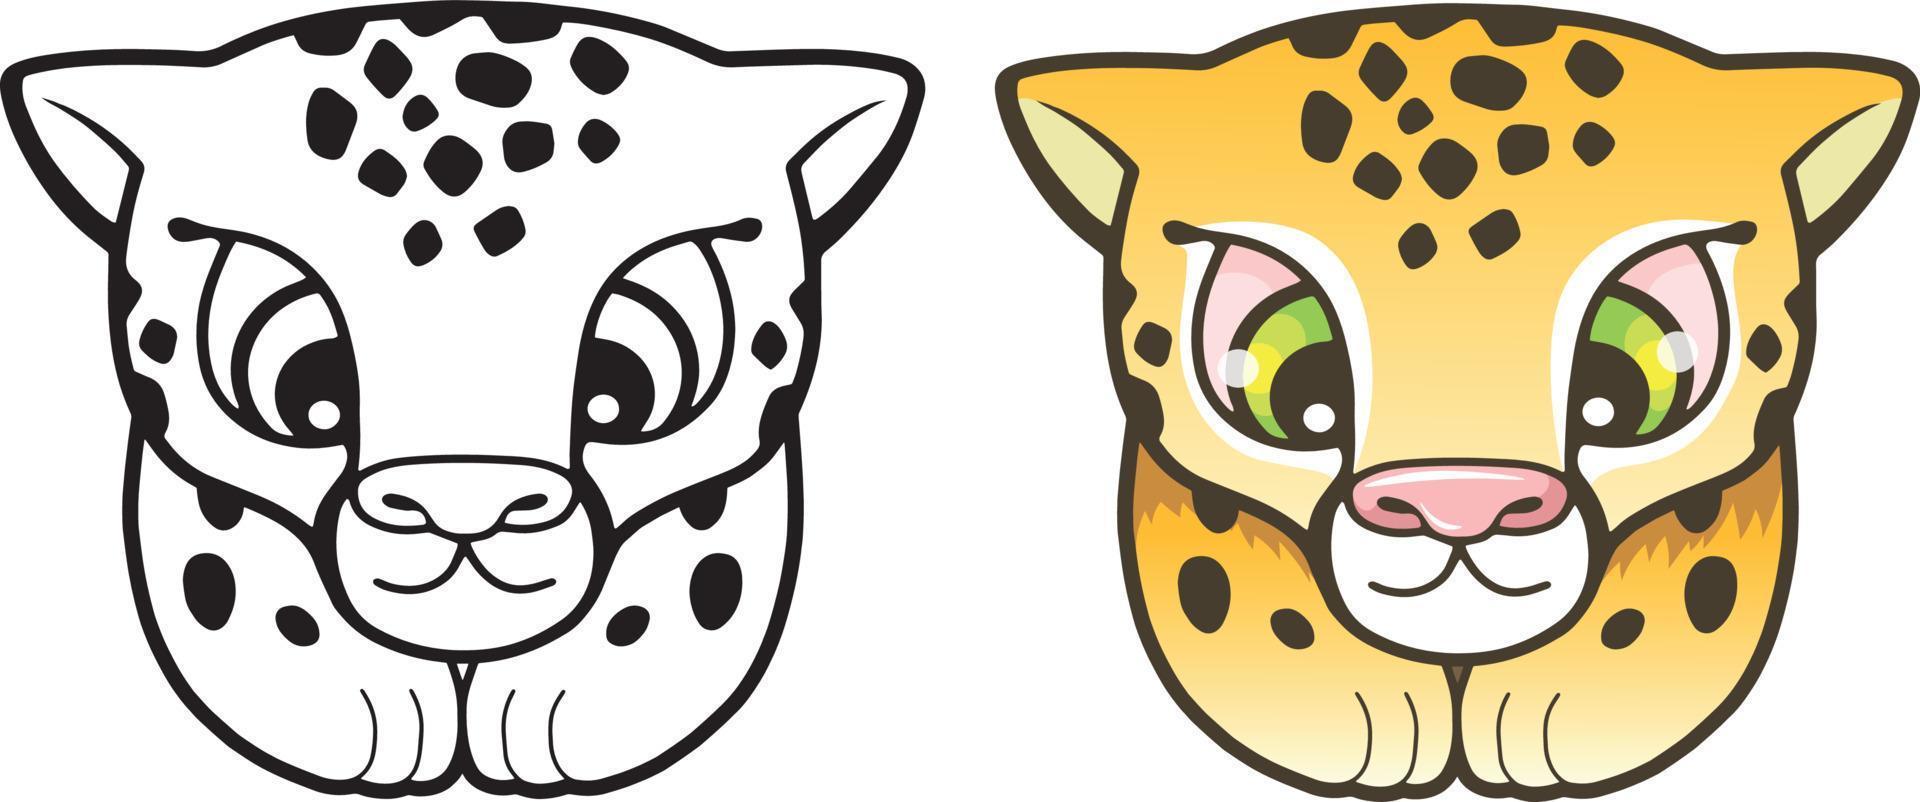 cute little cheetah coloring book vector